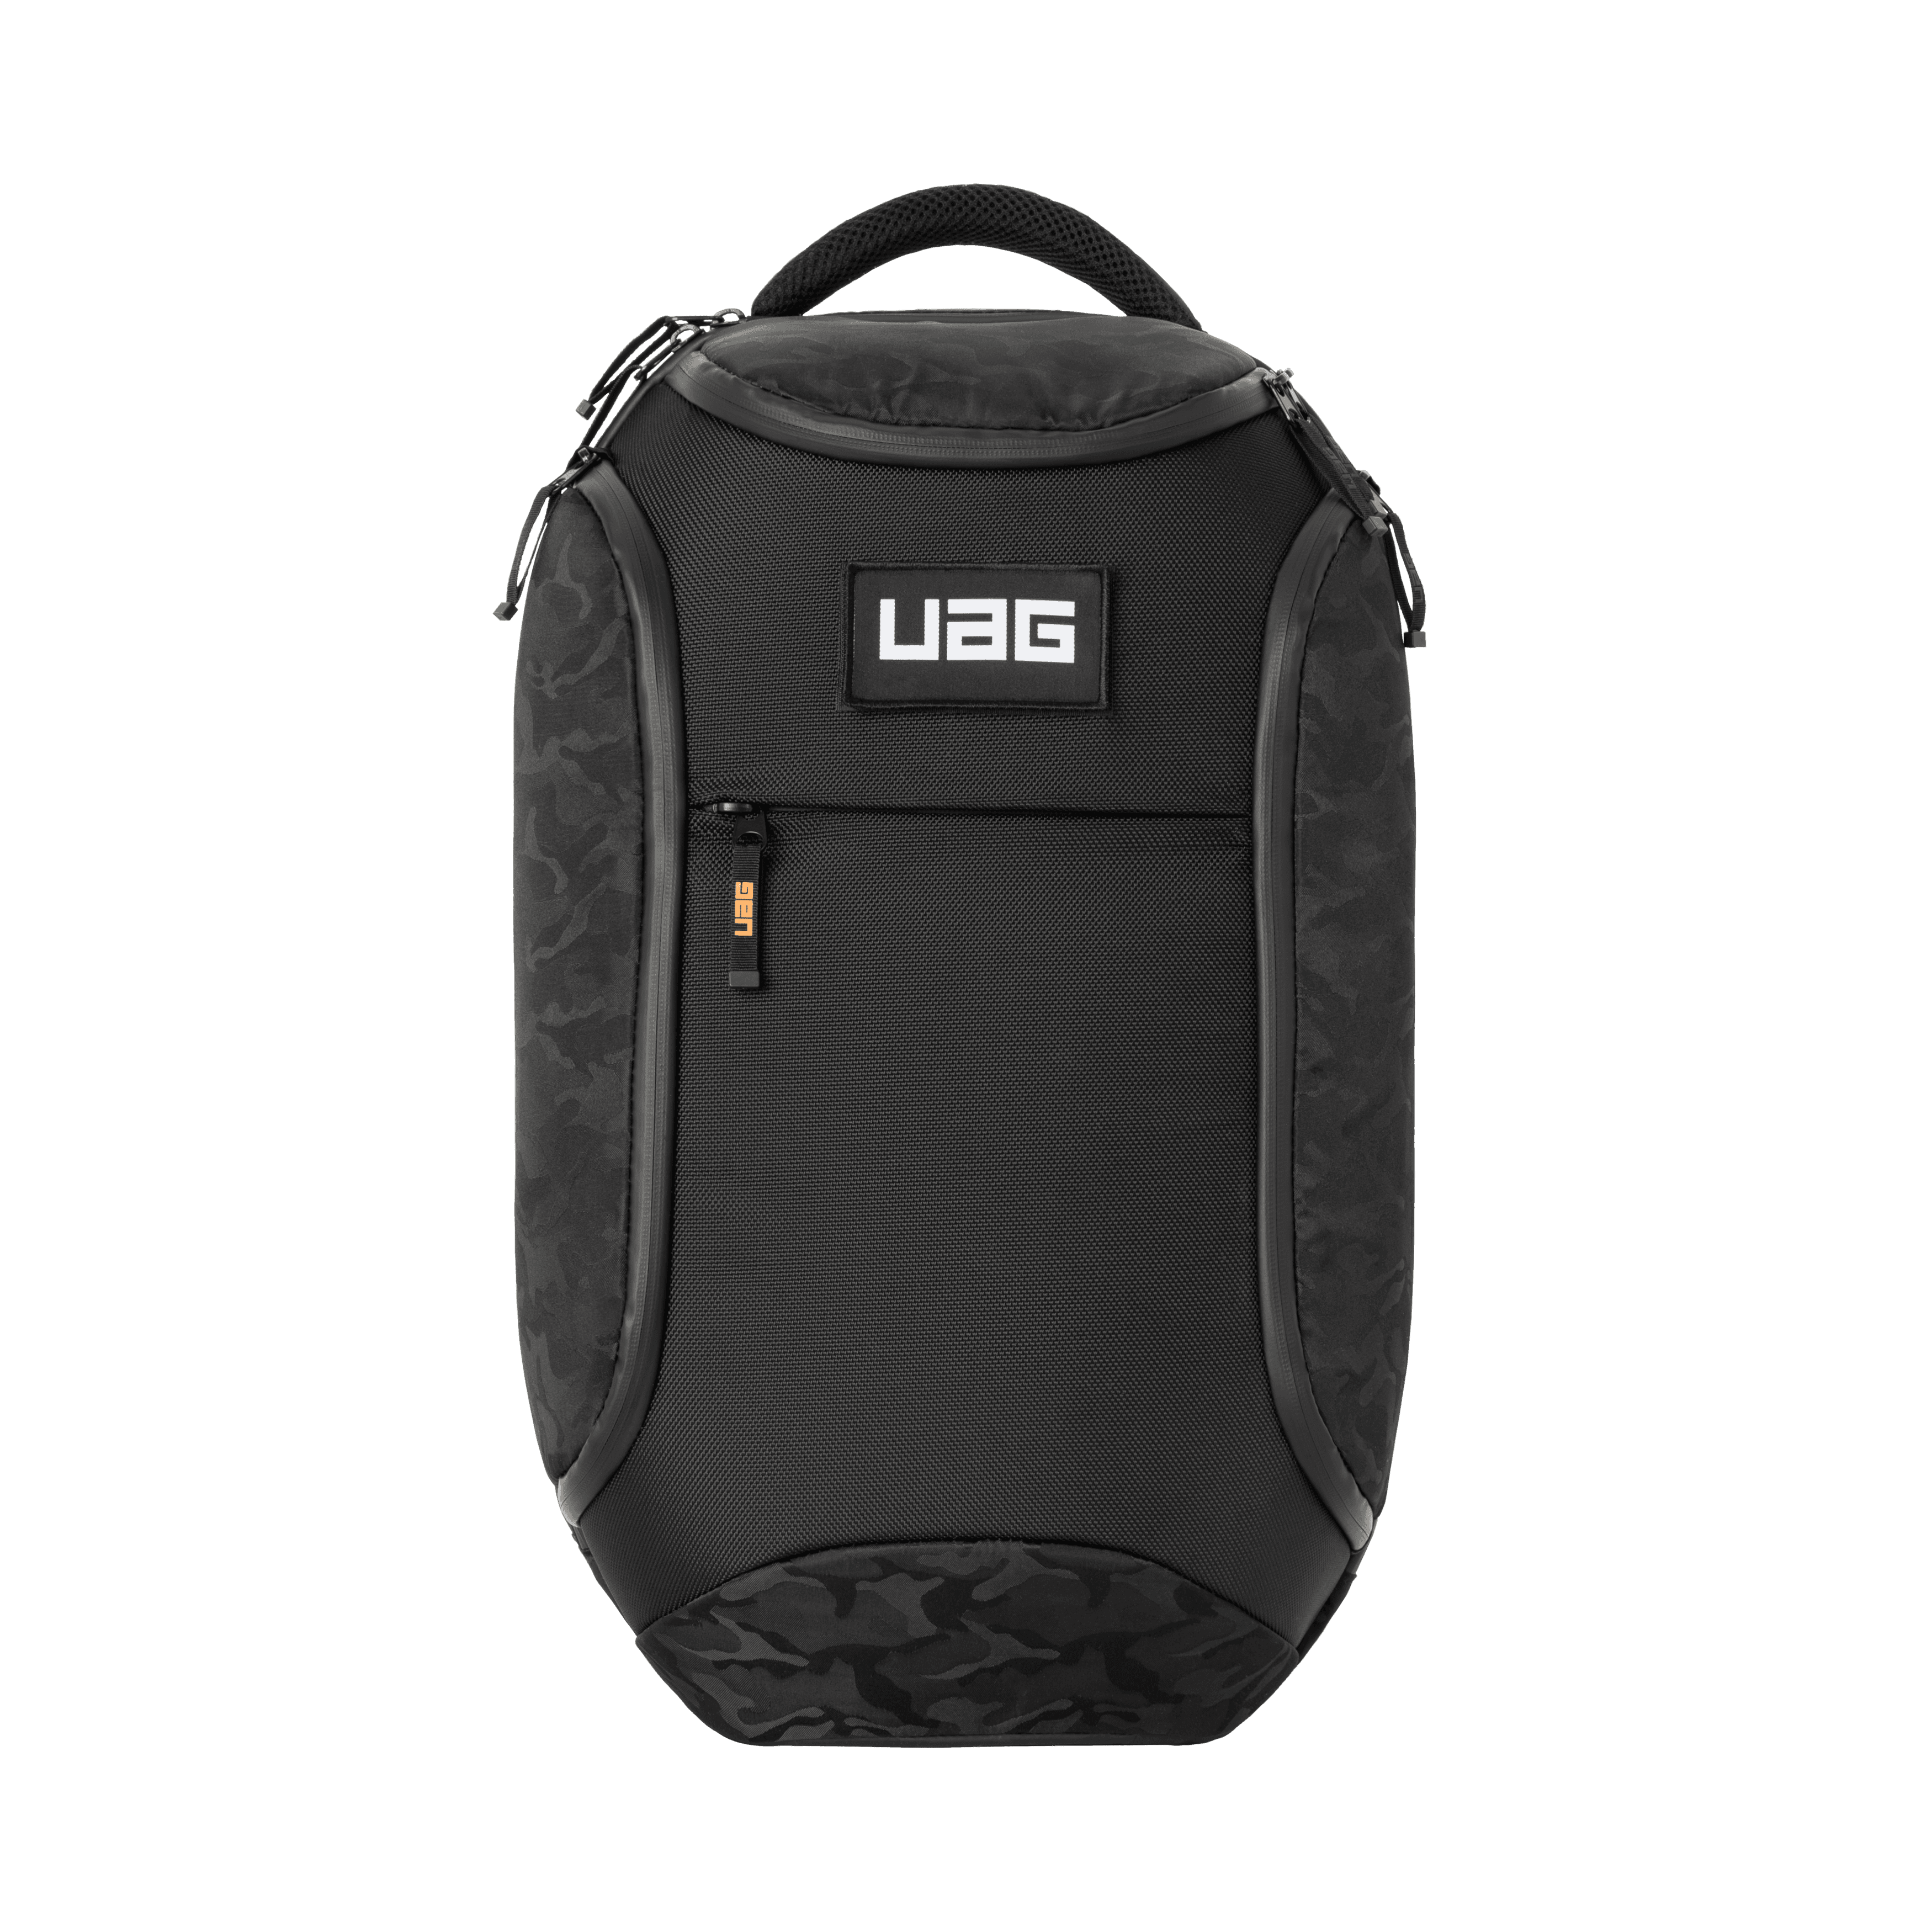 U] by UAG Mouve Backpack Everyday bag, Carry-on bag, Overnight bag 